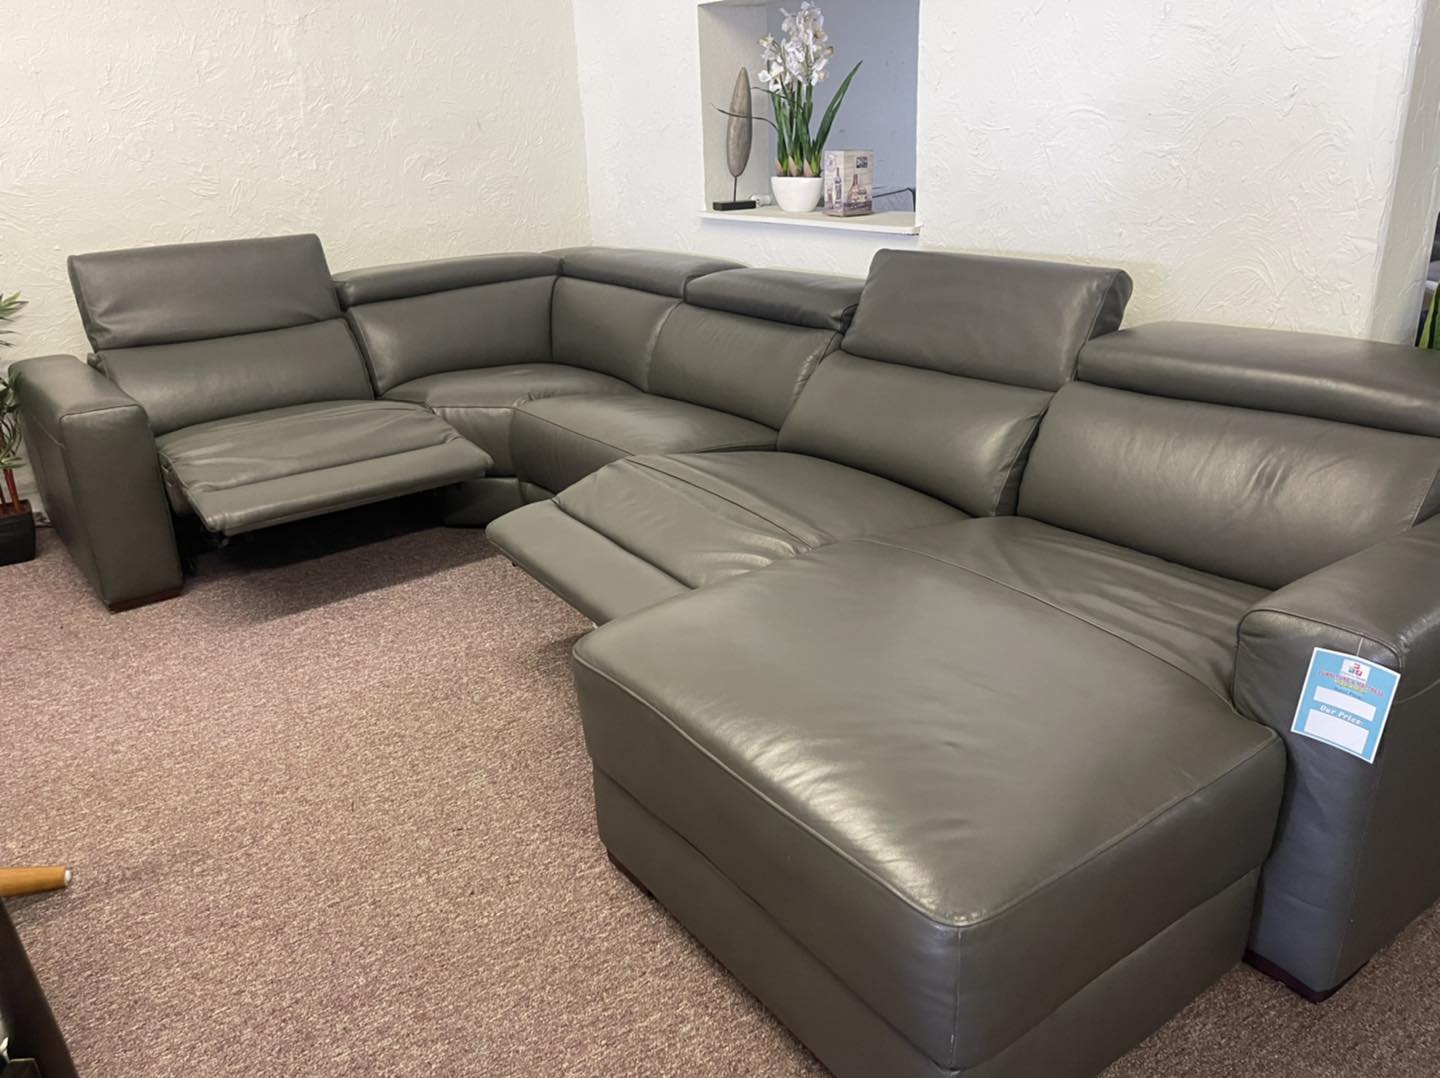 nevio 6-pc leather sectional sofa reviews